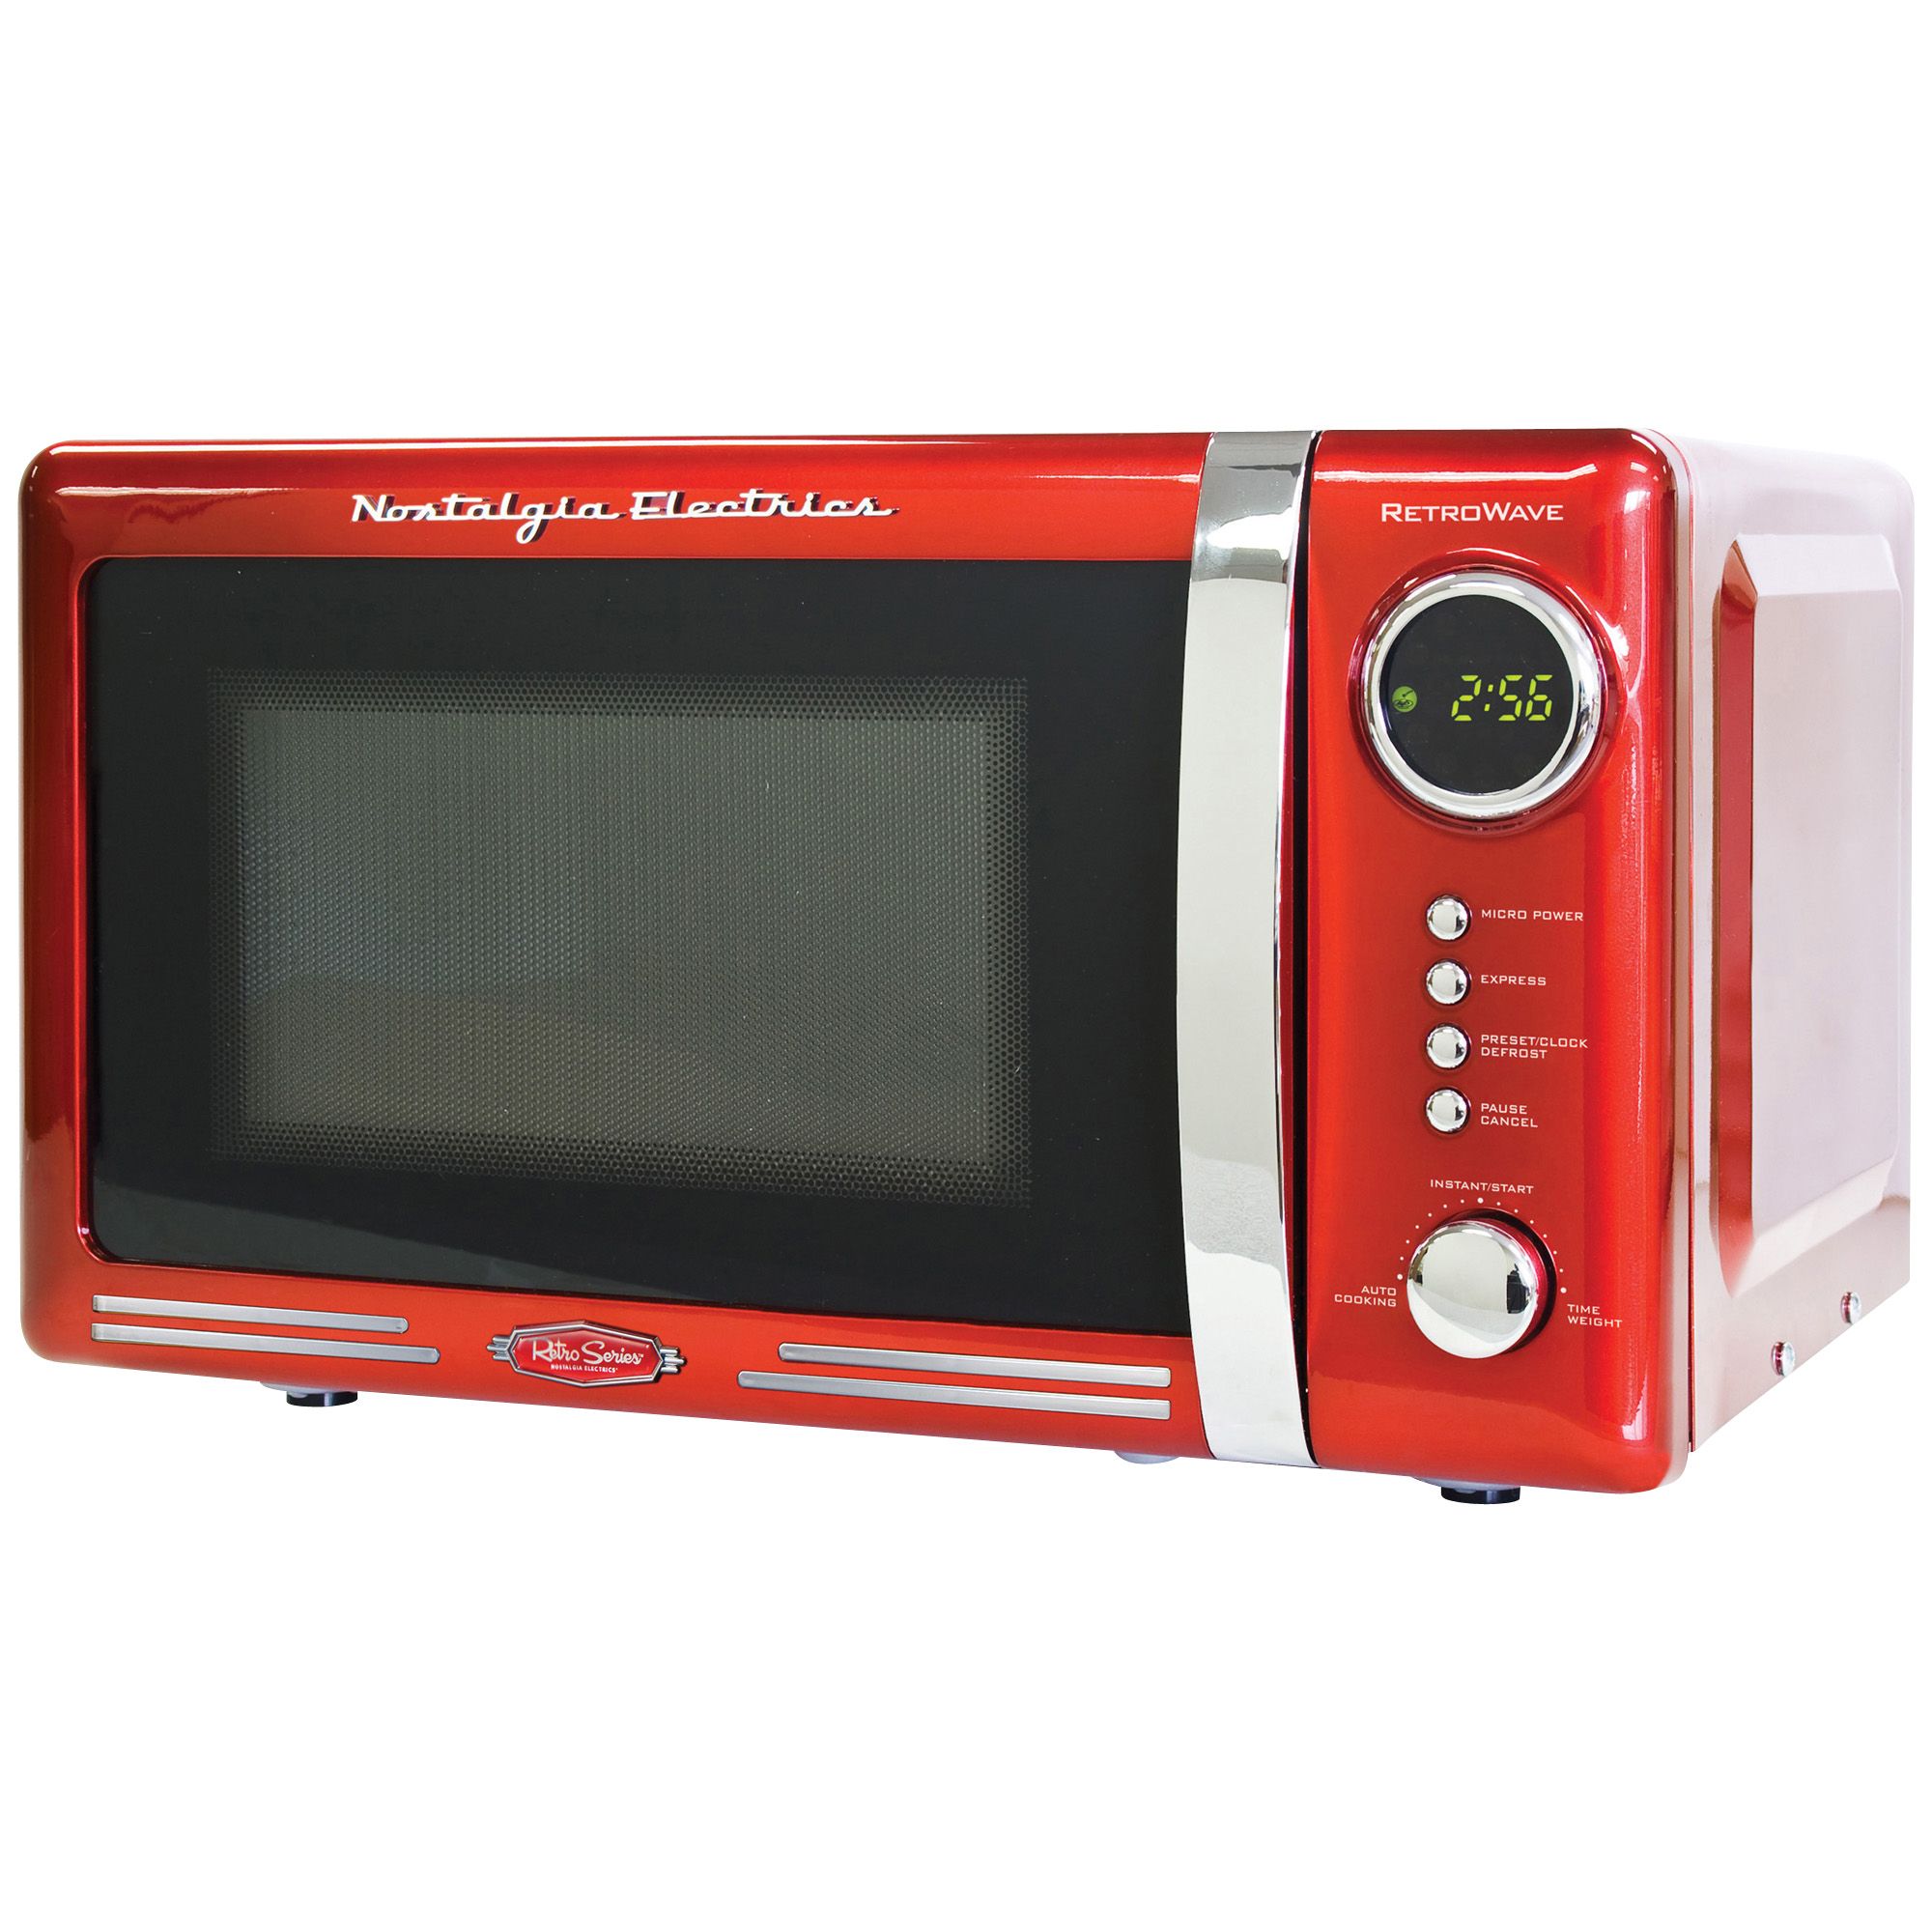 Fingerhut - Nostalgia Retro 0.7 Cu. Ft. 700-Watt Countertop Microwave Oven  - Red